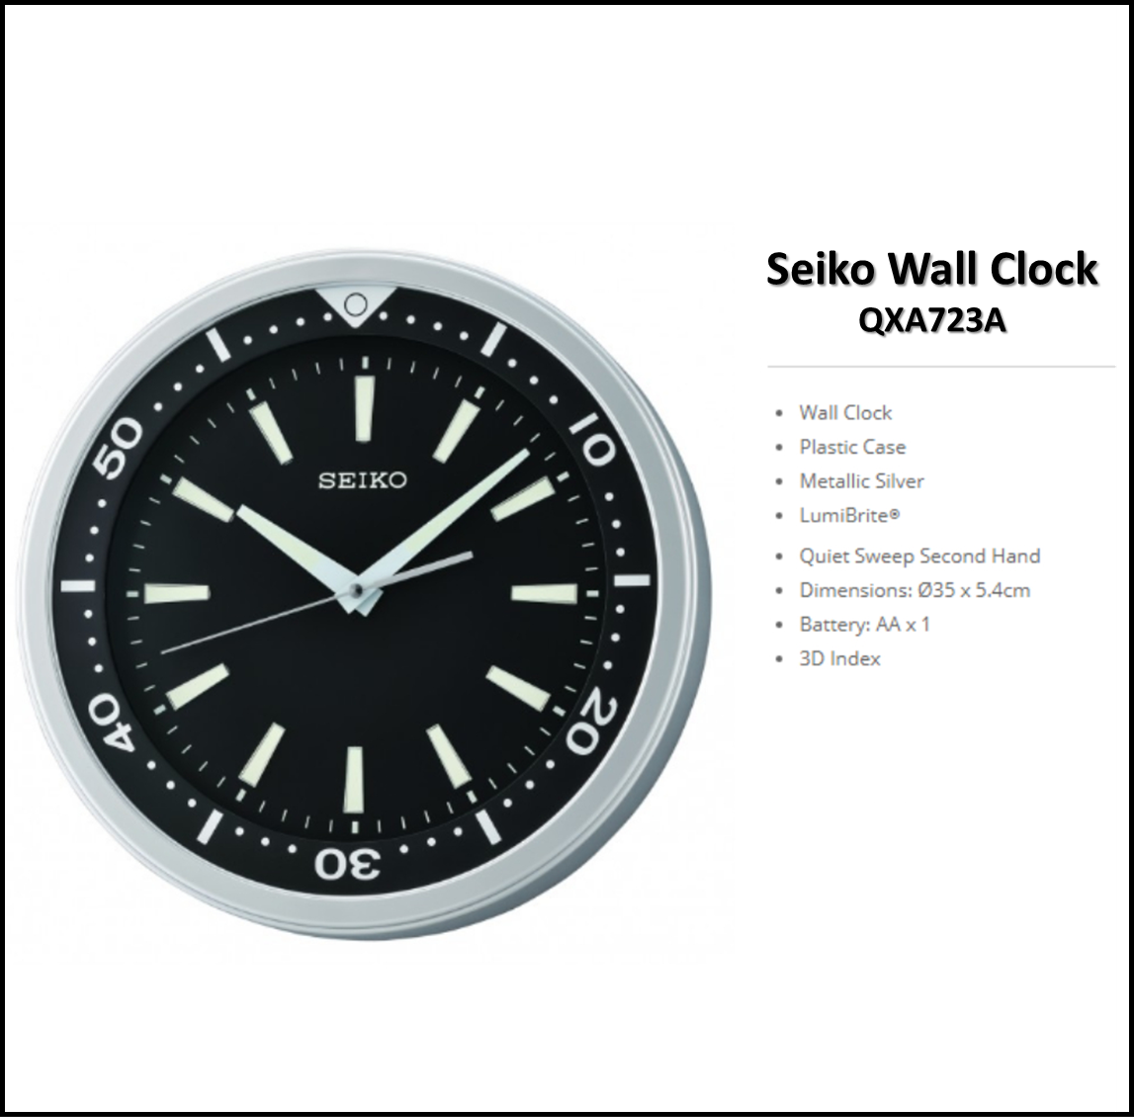 Seiko Wall Clock - Seiko 14 inch 3D Index with LumiBrite® 